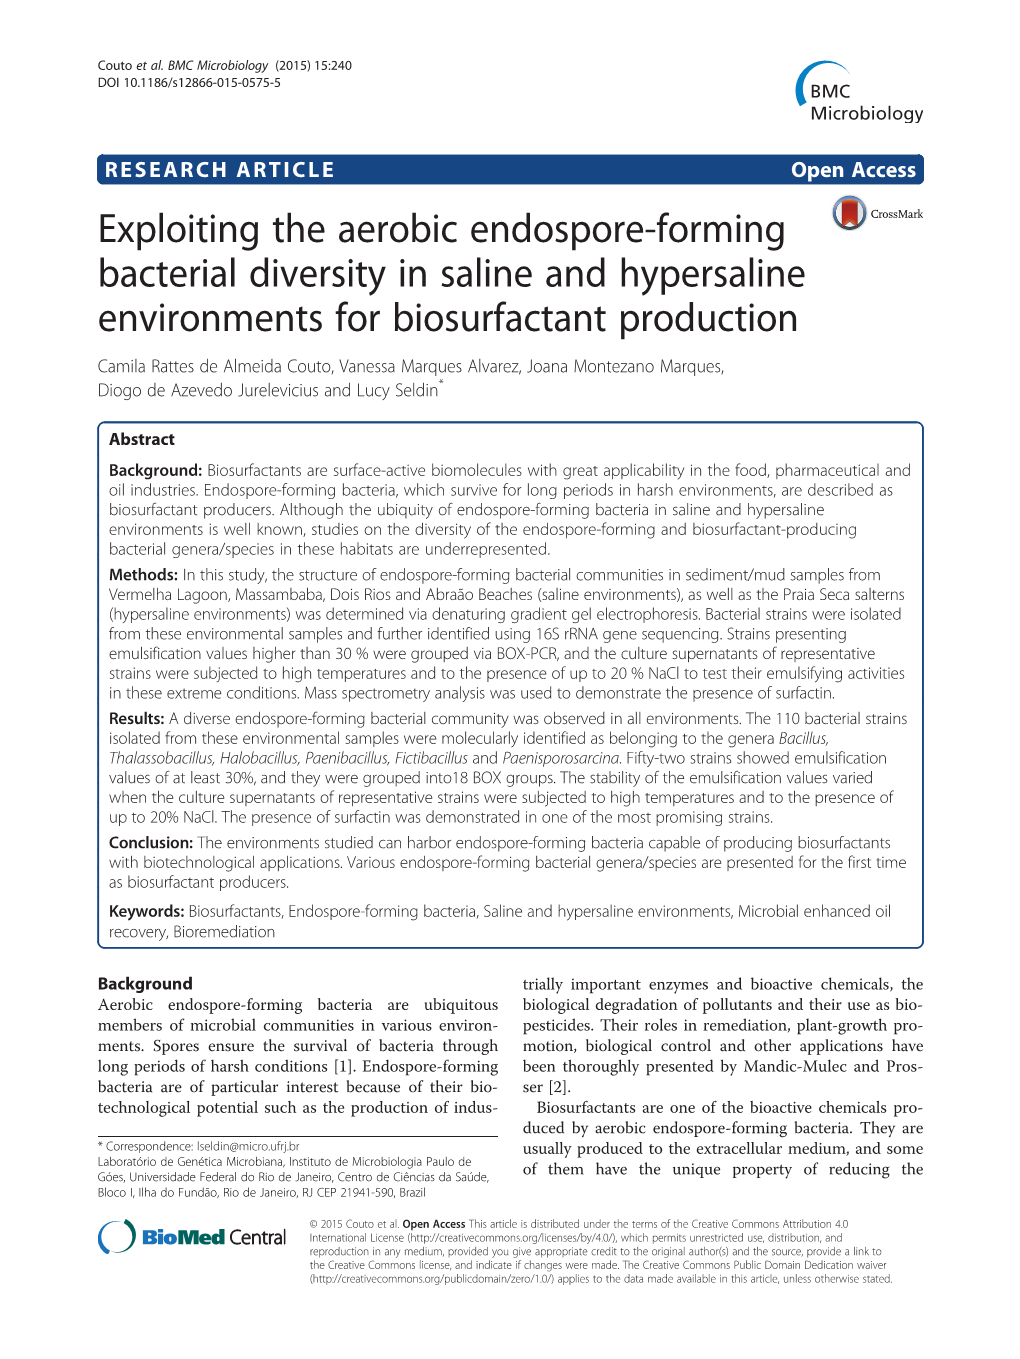 Exploiting the Aerobic Endospore-Forming Bacterial